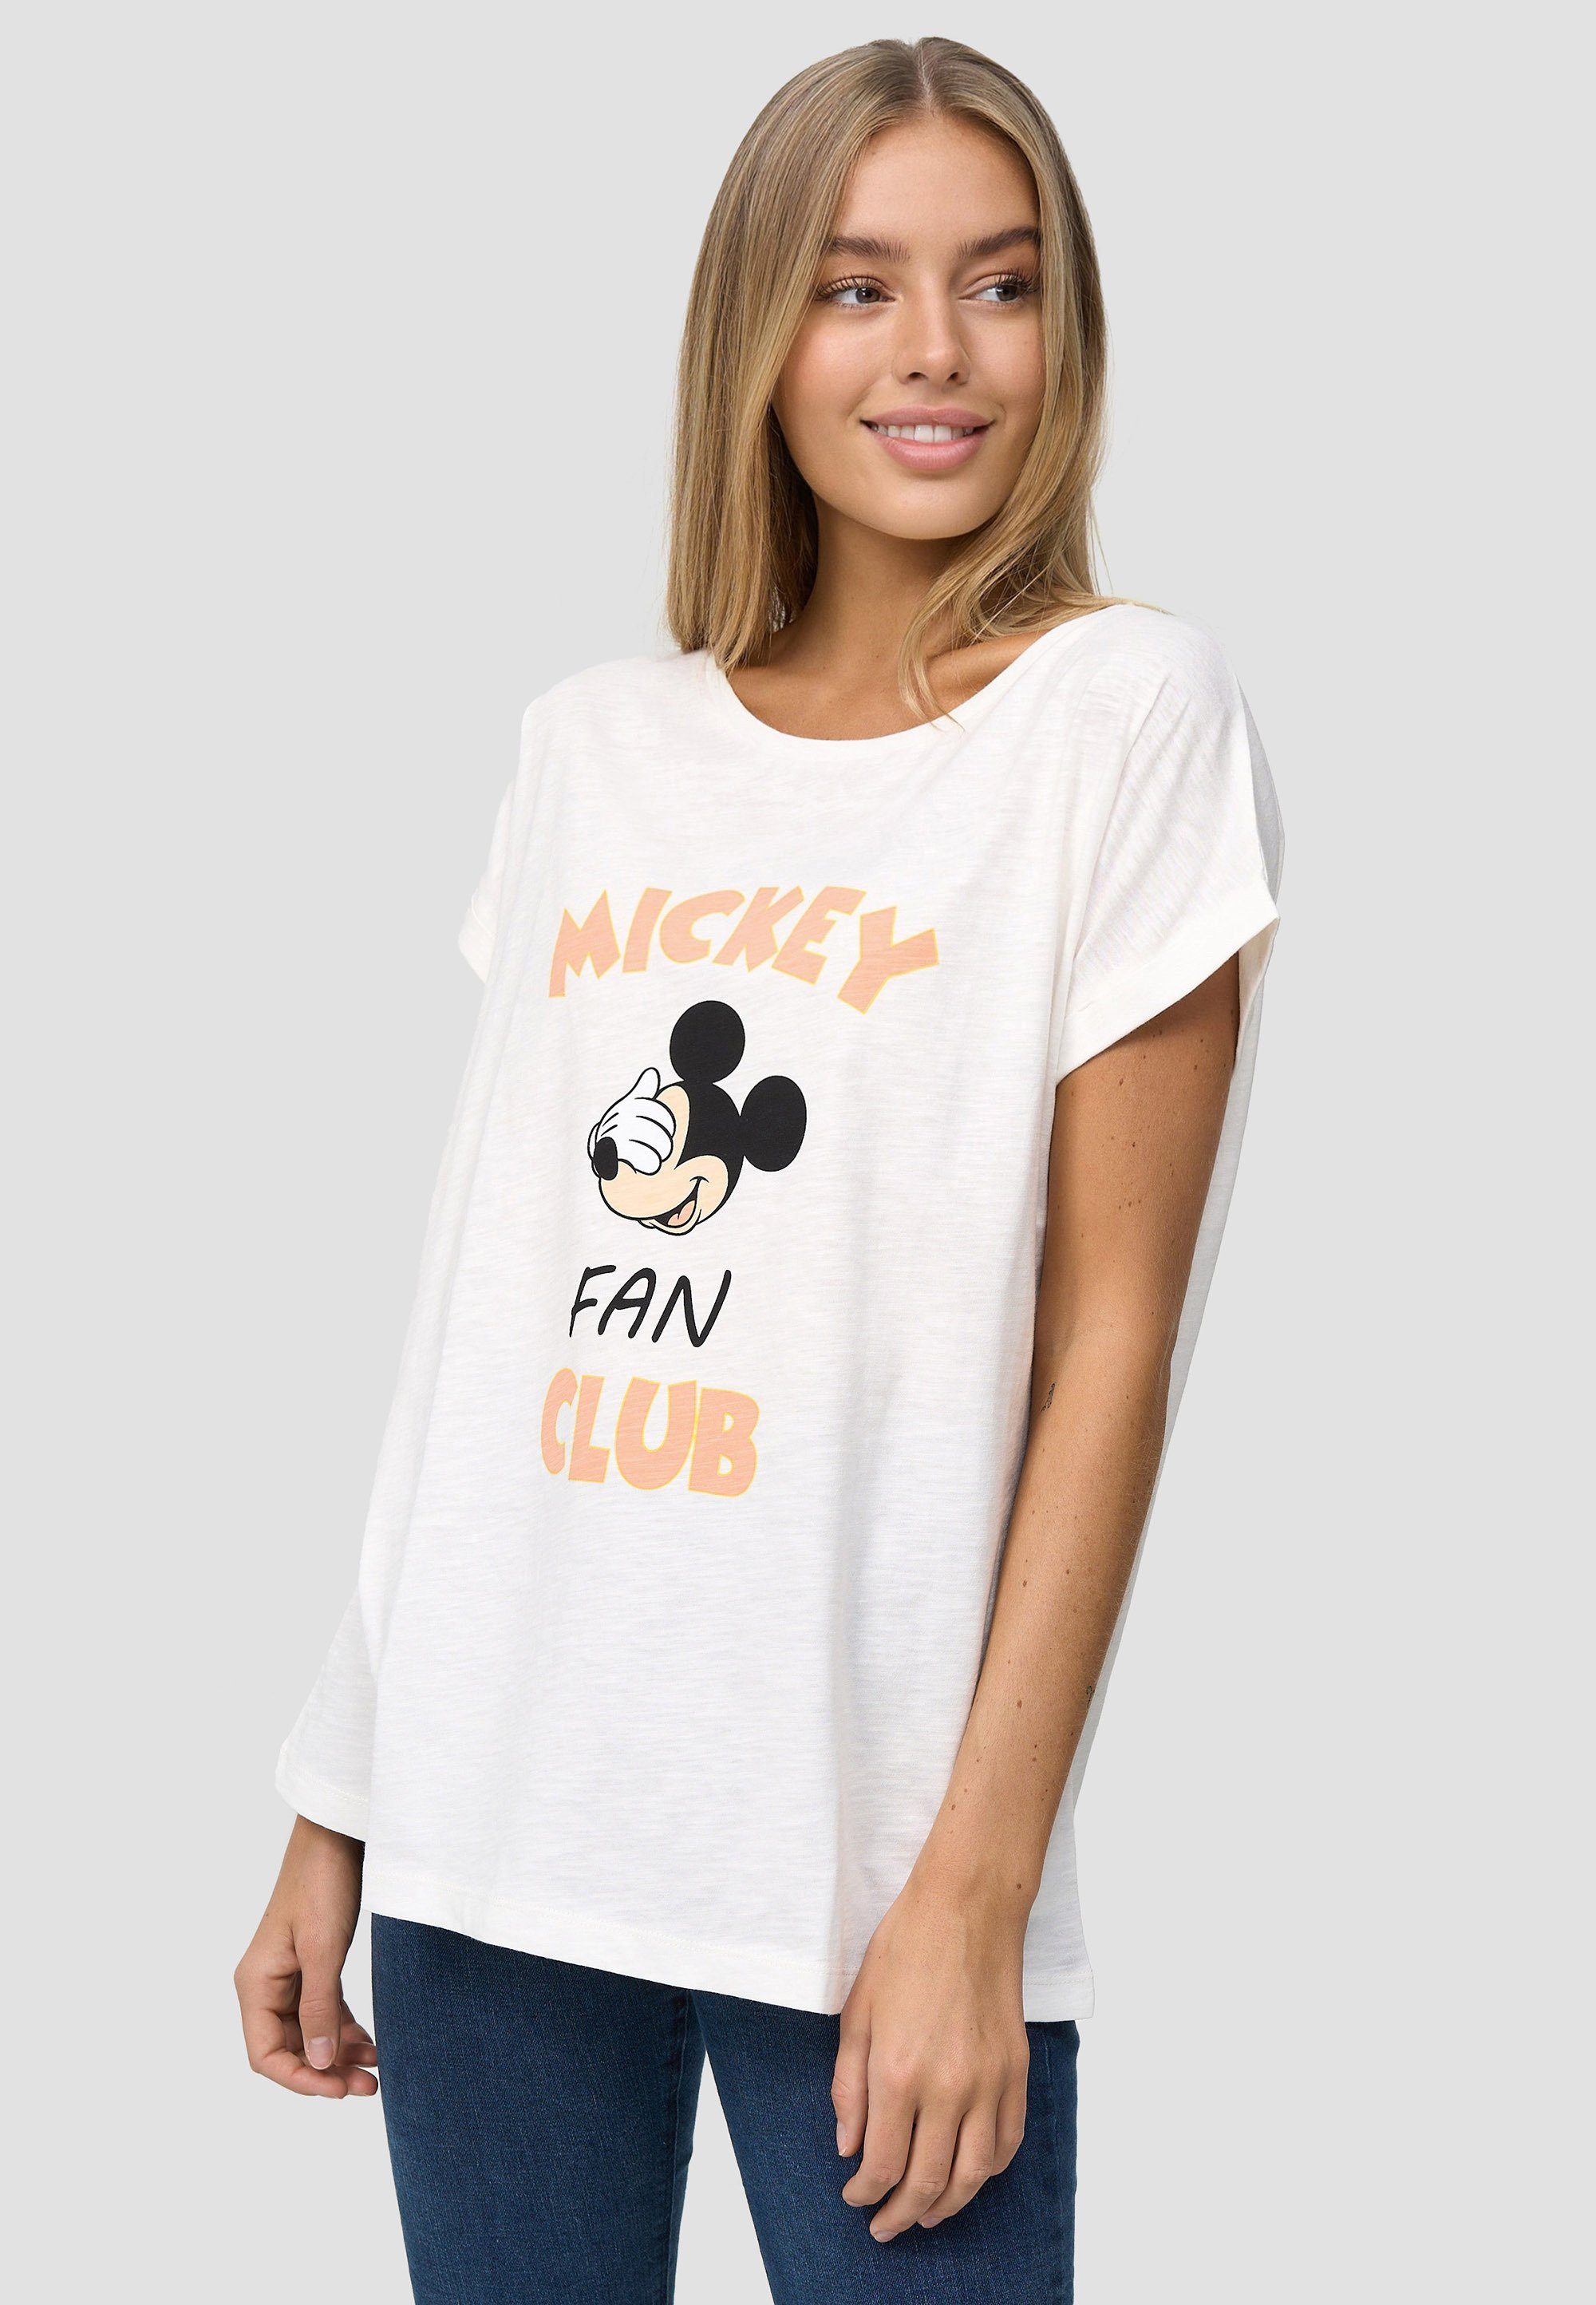 Mouse Club Mickey Bio-Baumwolle GOTS Fan zertifizierte Recovered T-Shirt